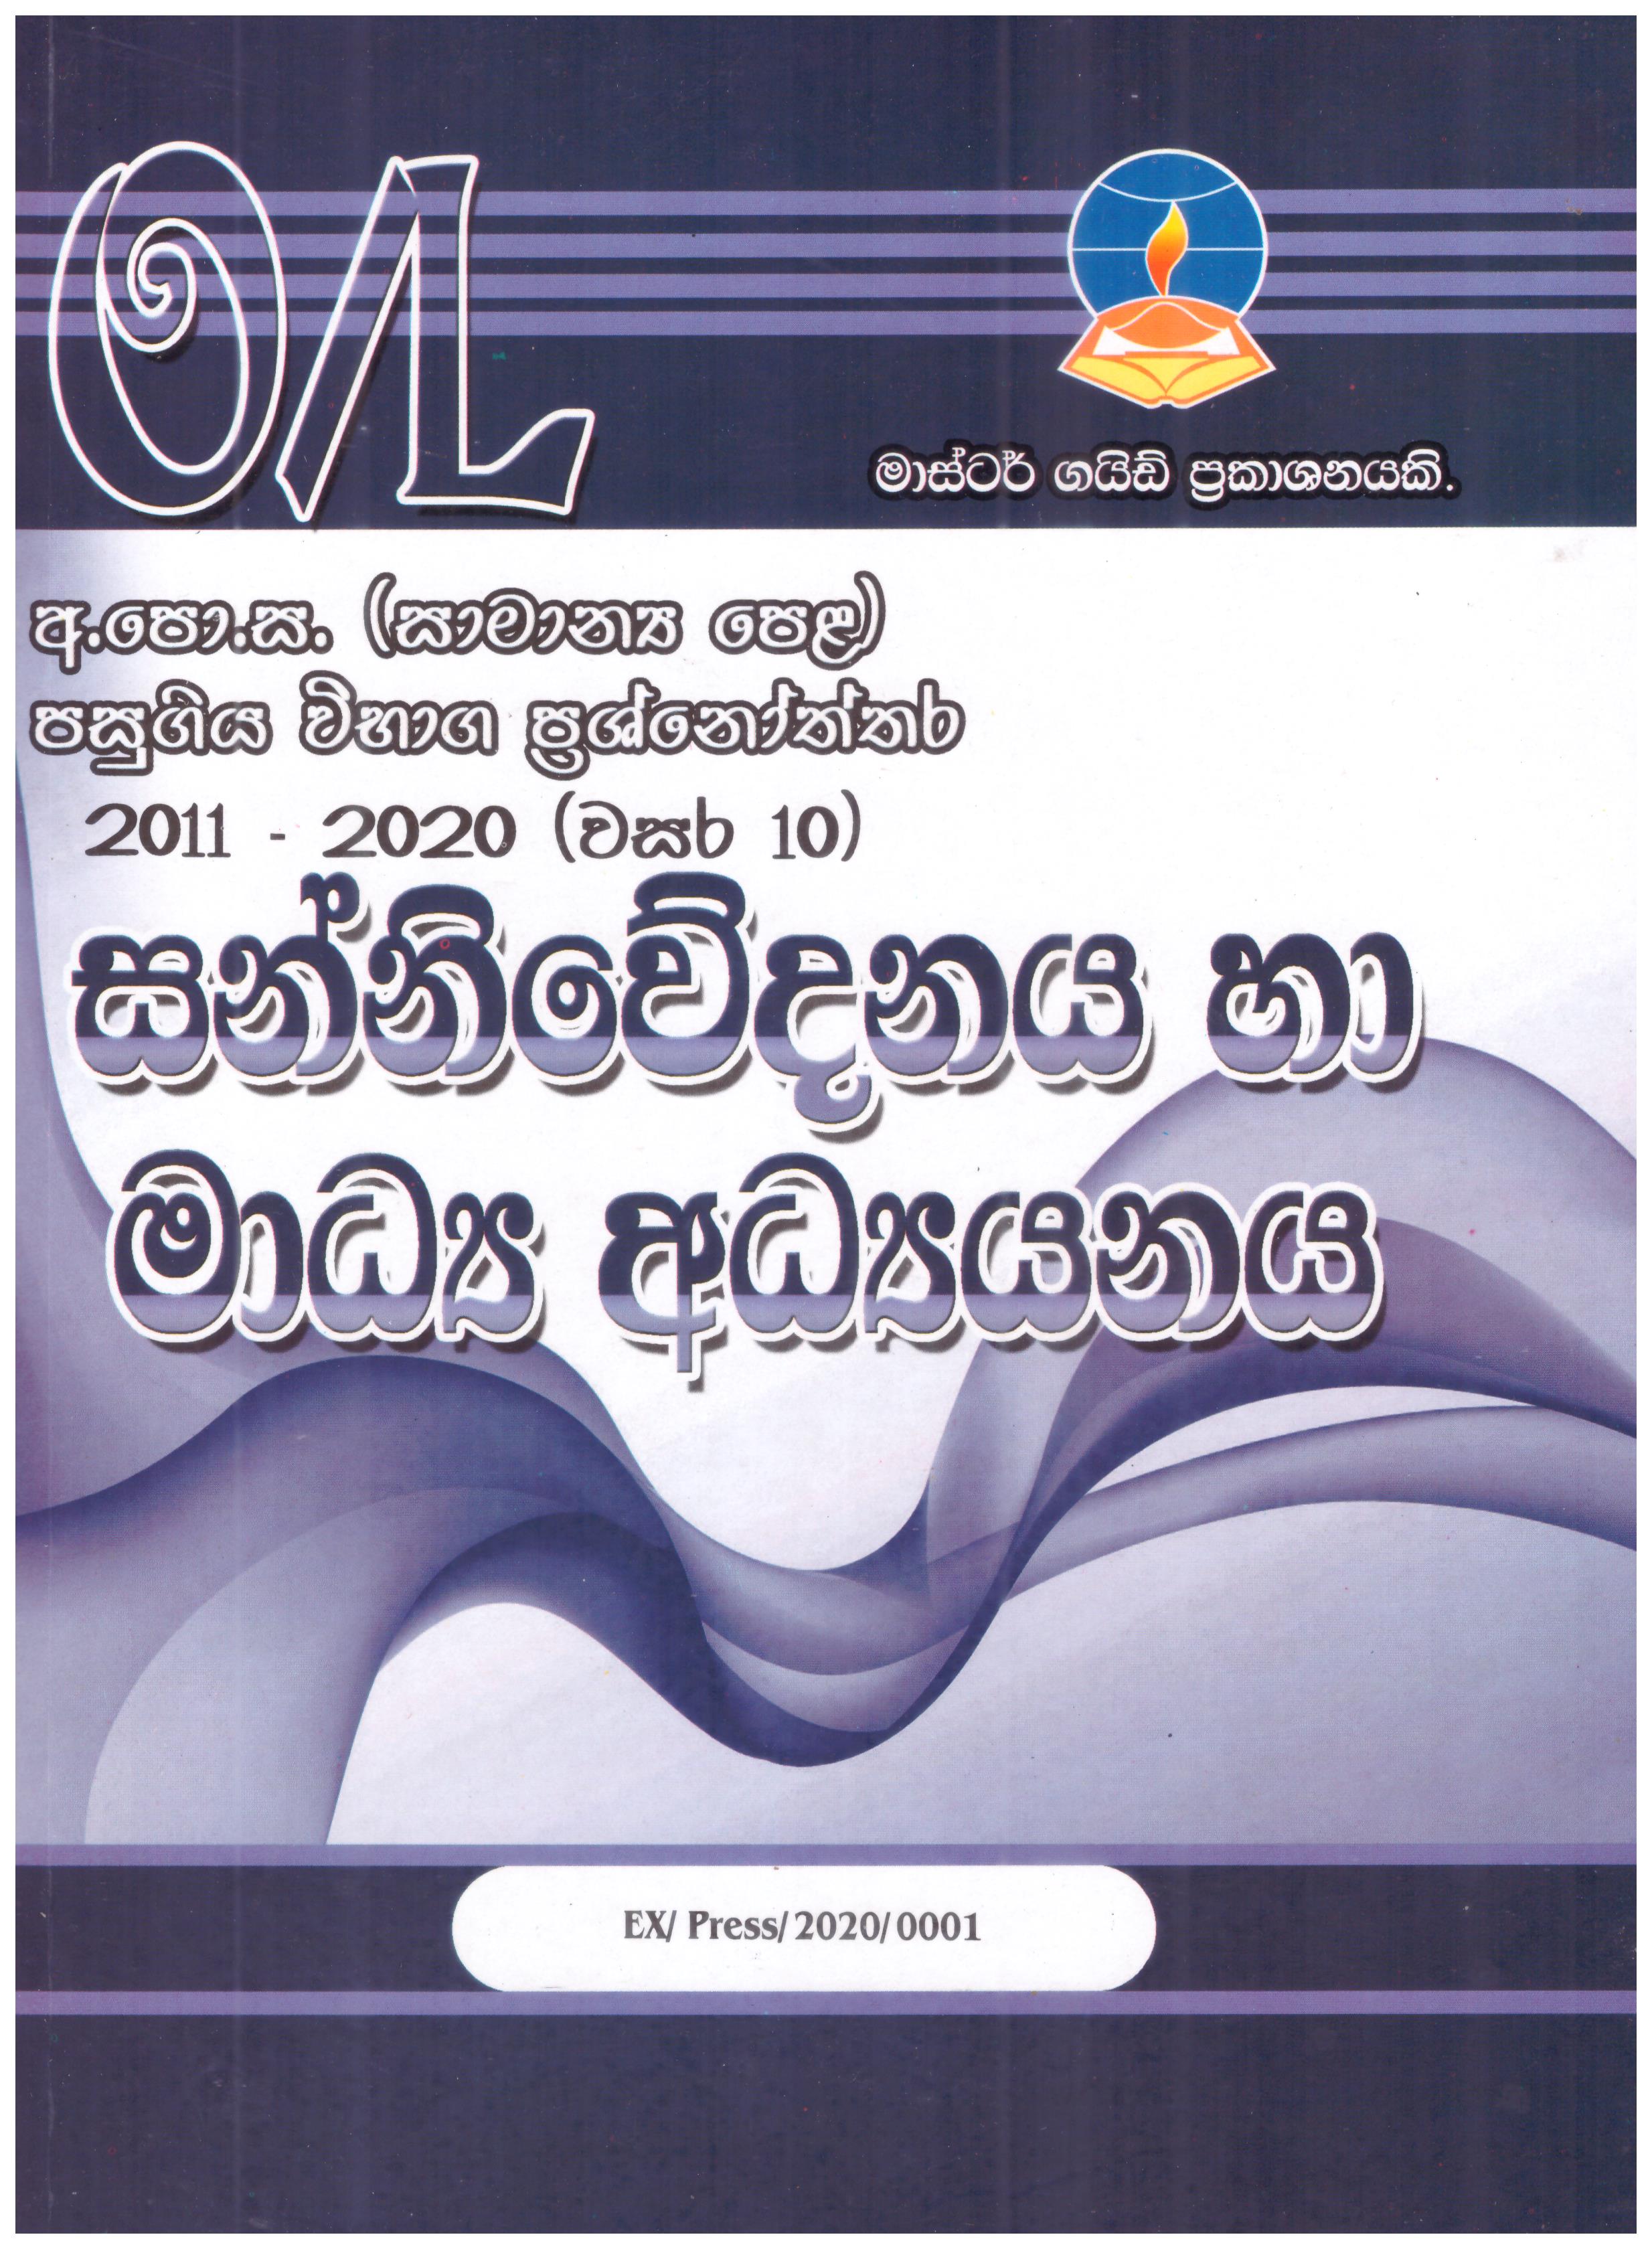 Master Guide O/L Pasugiya vibaga prasnoththara Sannivedana ha Madya adyanaya 2012 - 2022